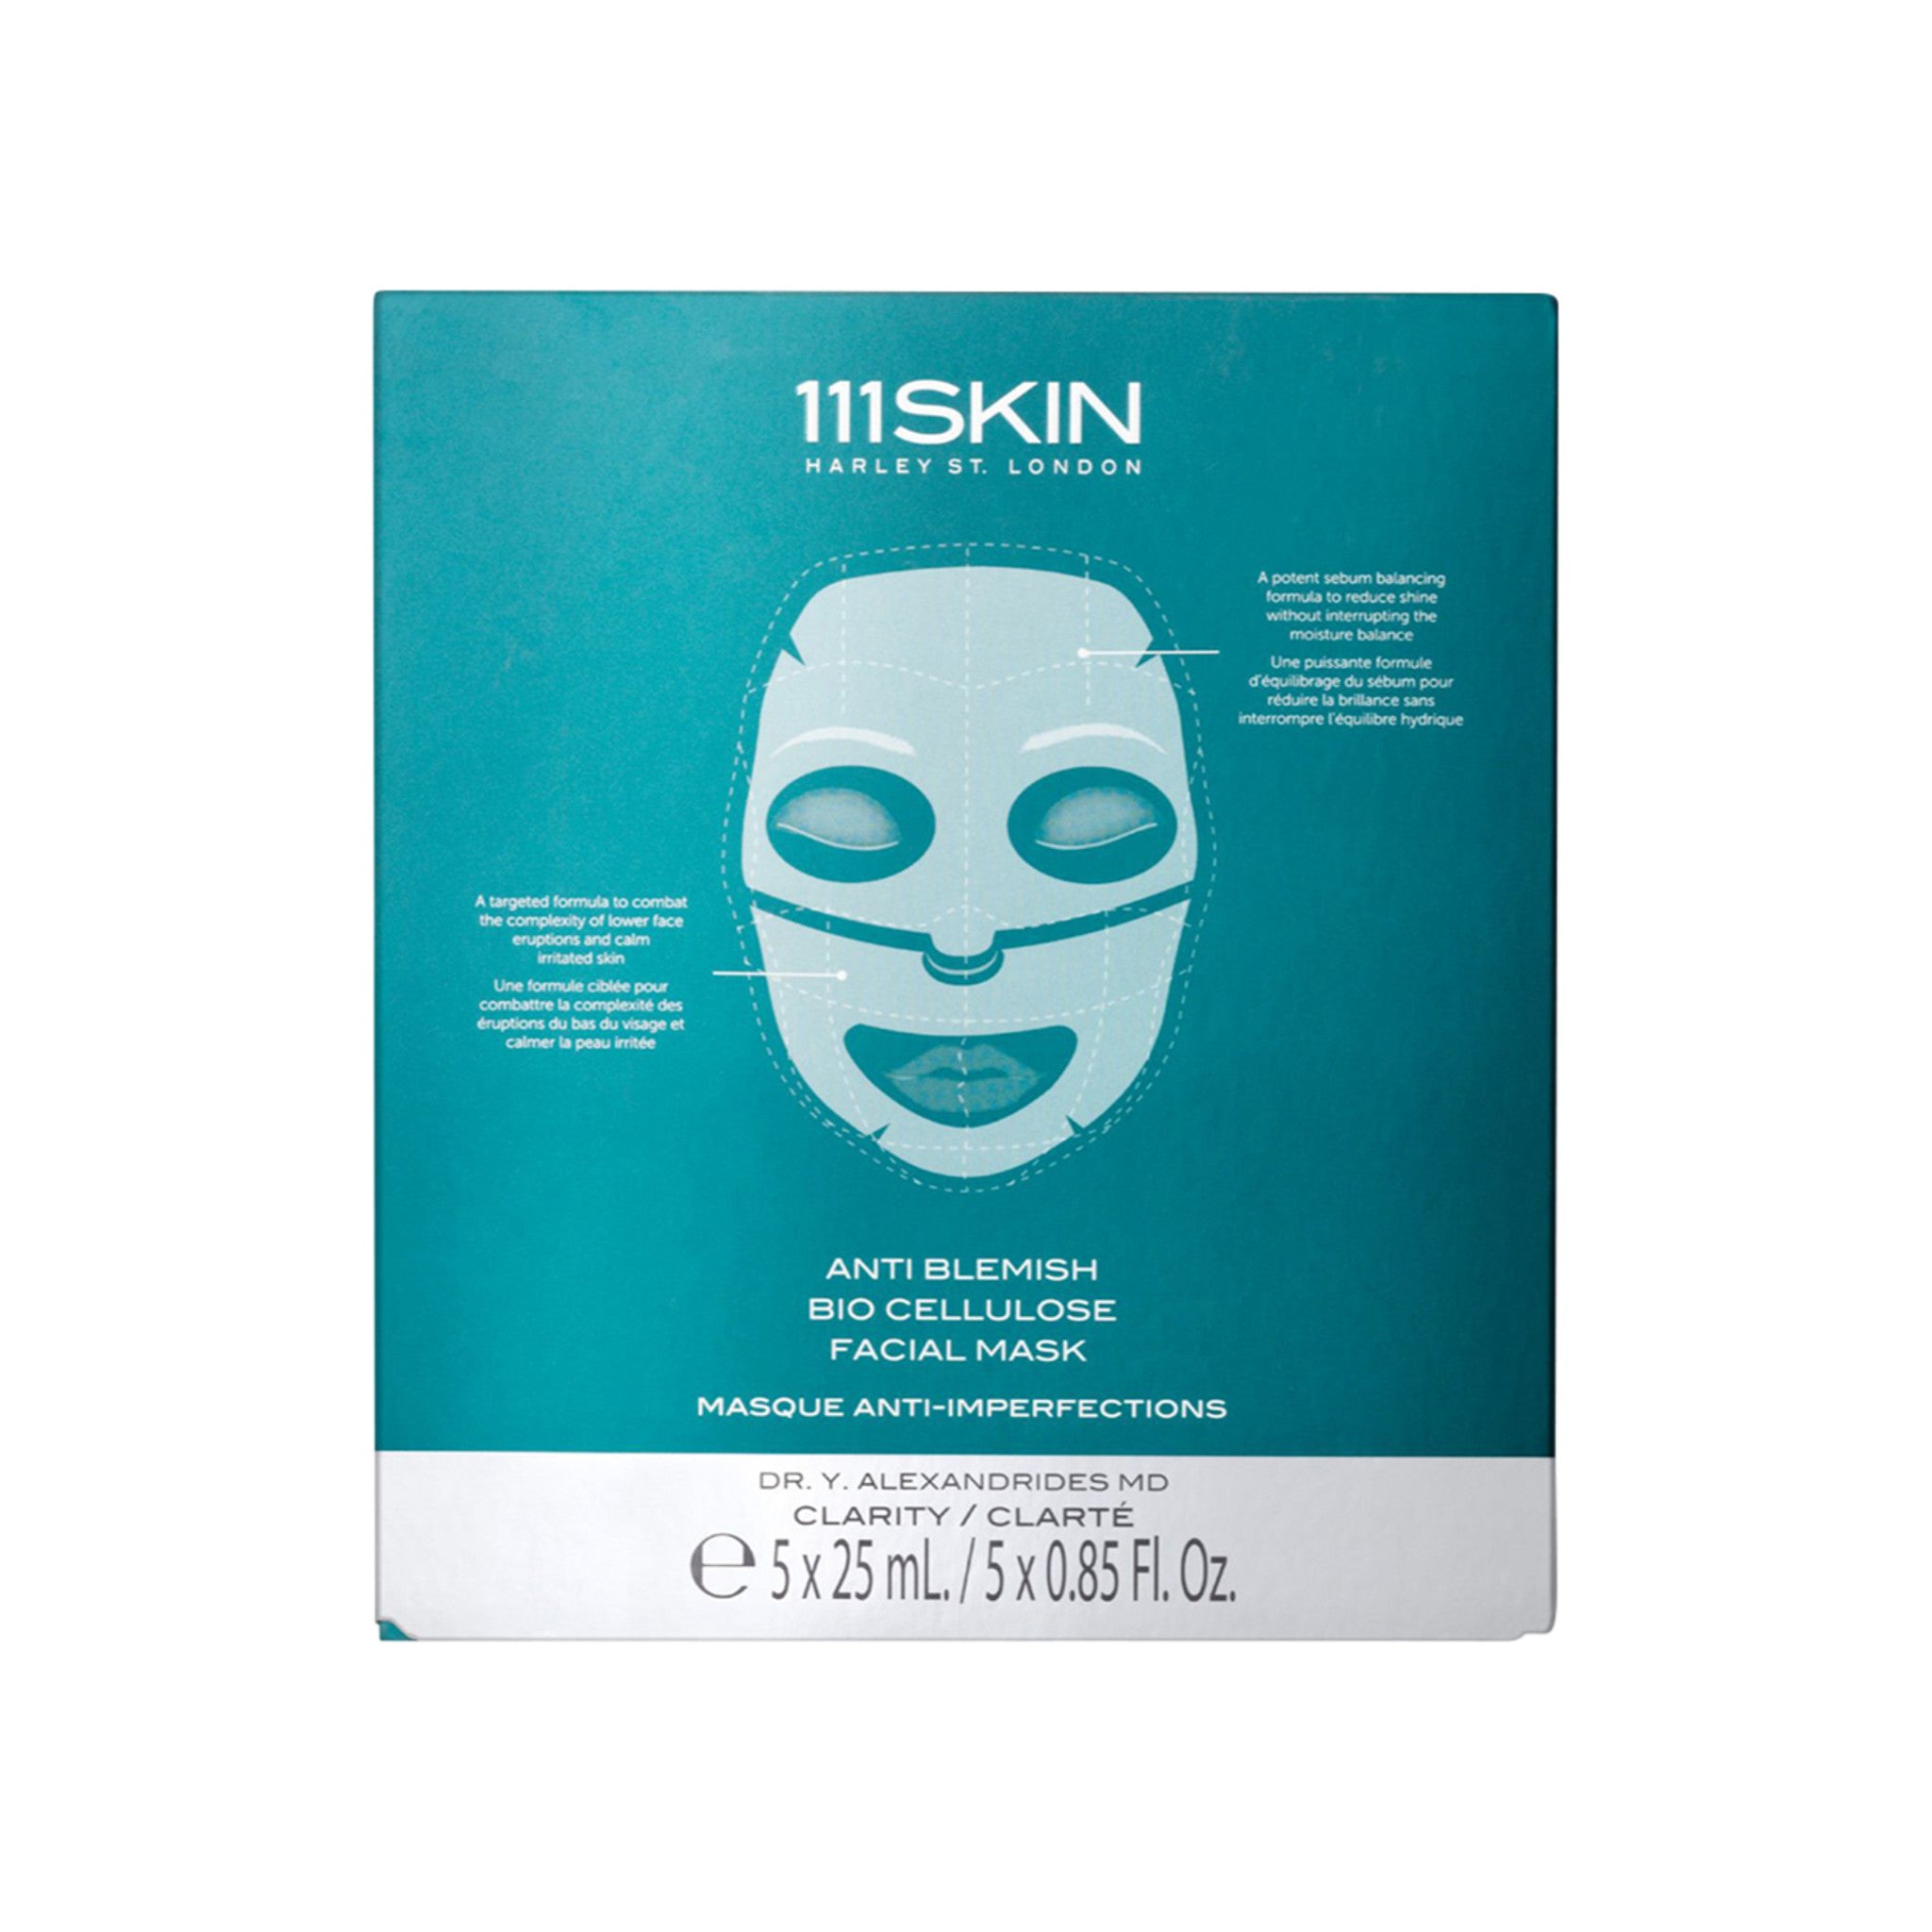 111SKIN Anti Blemish Biocellulose Facial Mask Size variant: 5 Treatments main image.